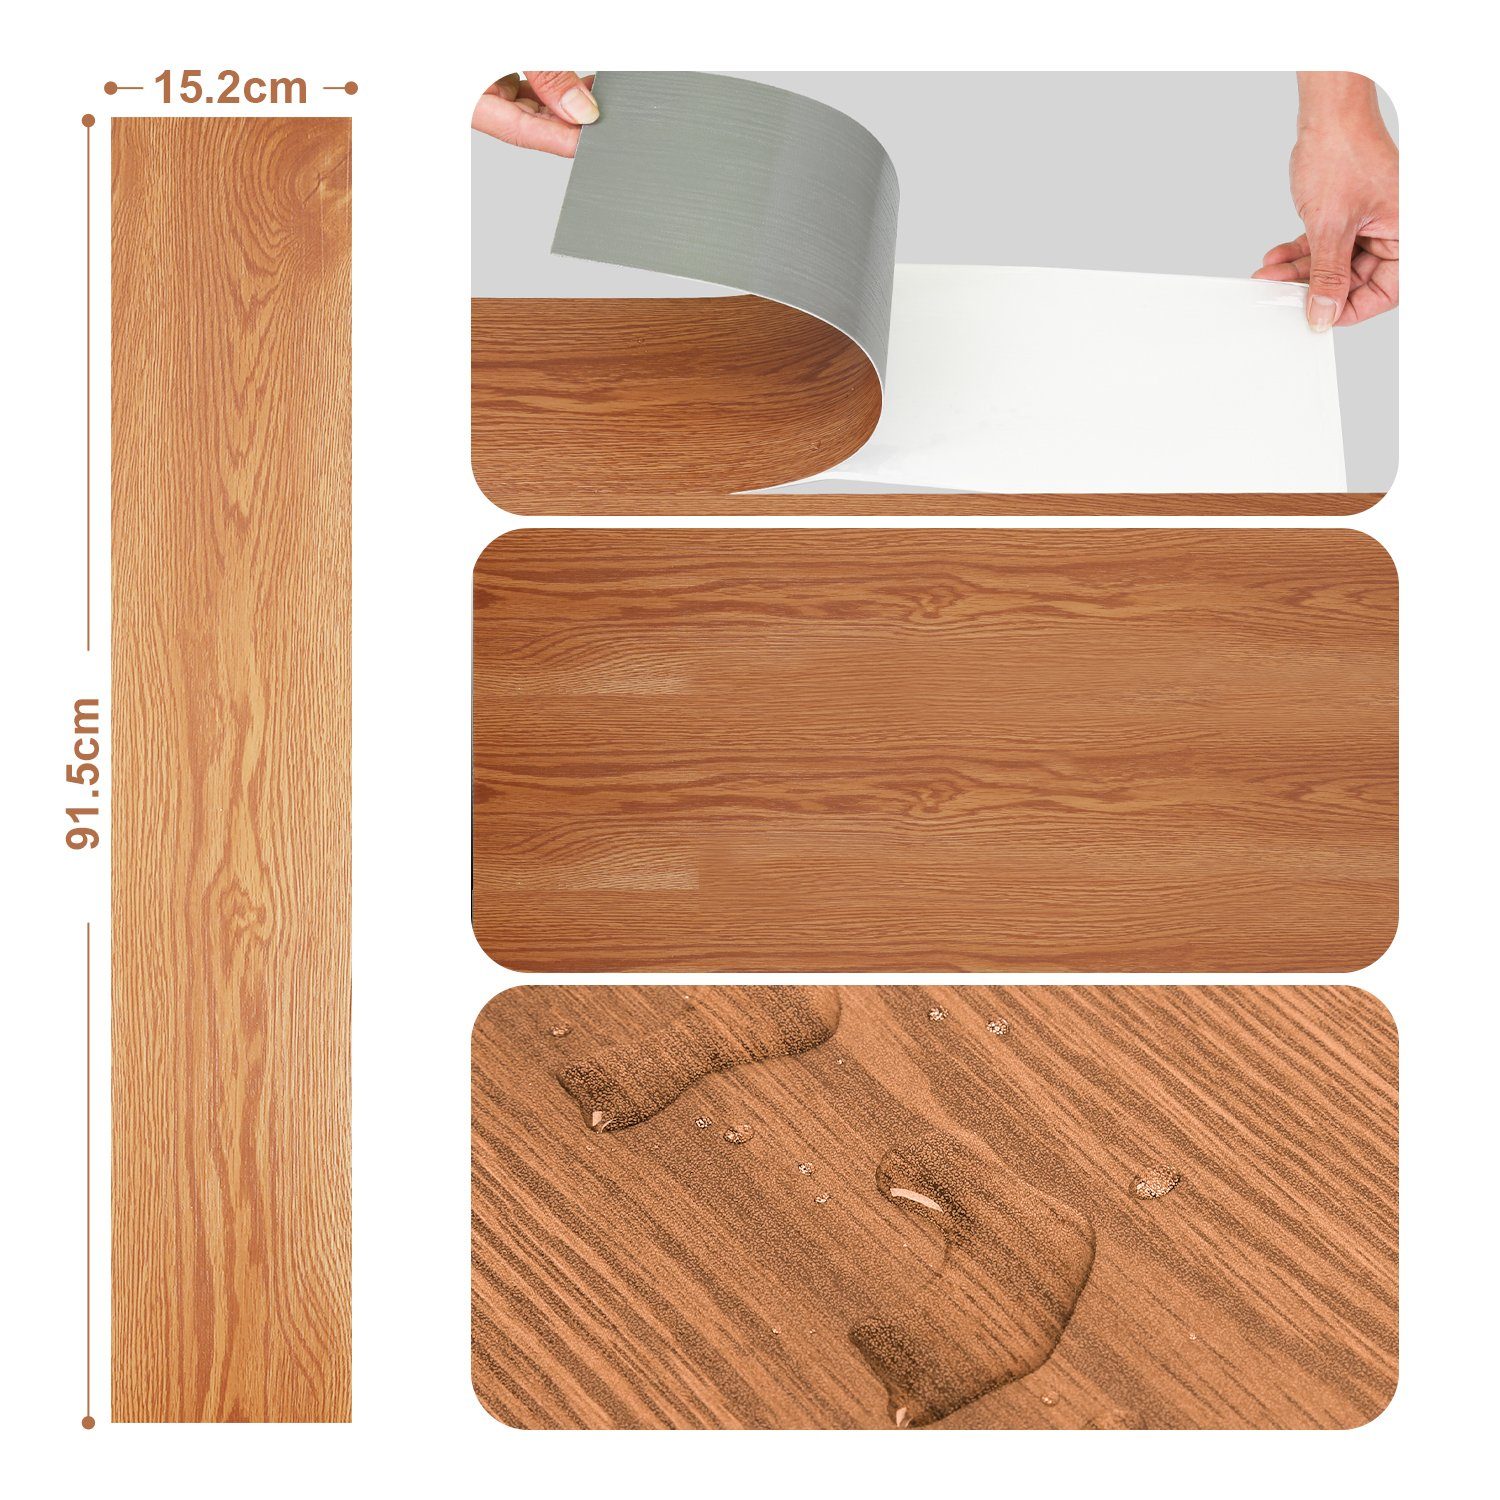 Vinylboden selbstklebend,0,975 Oak Vinylboden m²=7 Stück im Warm selbstklebend Design Vinylplanke Gimisgu Classic Paket,